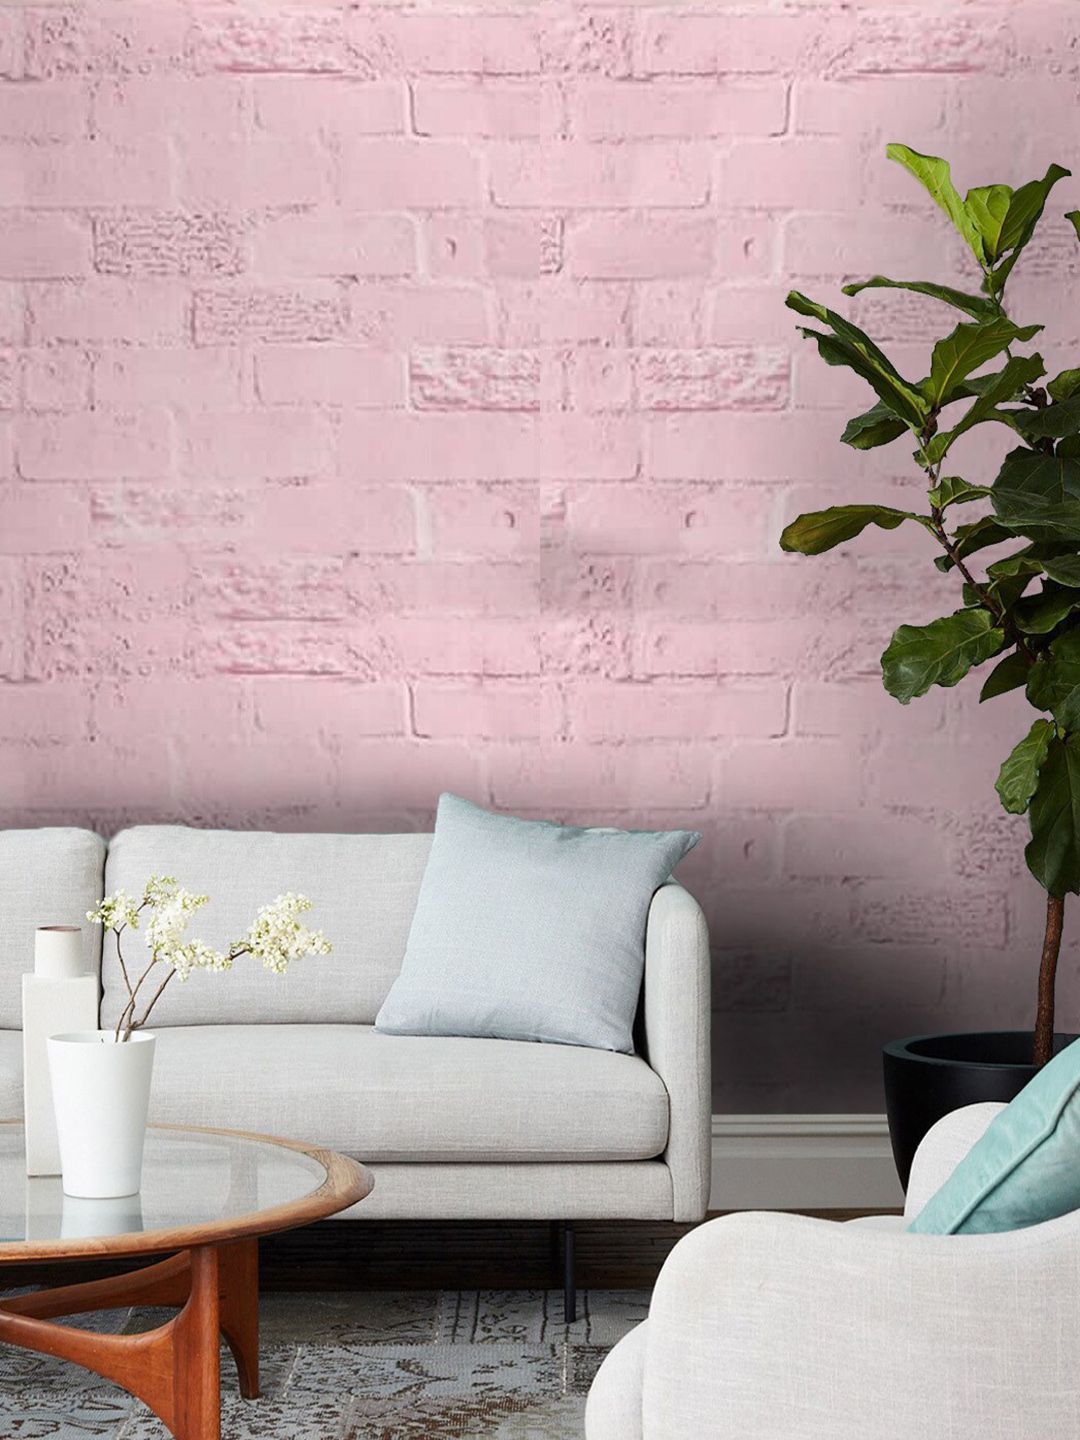 Jaamso Royals Pink Self-Adhesive & Waterproof Brick Wallpaper Price in India